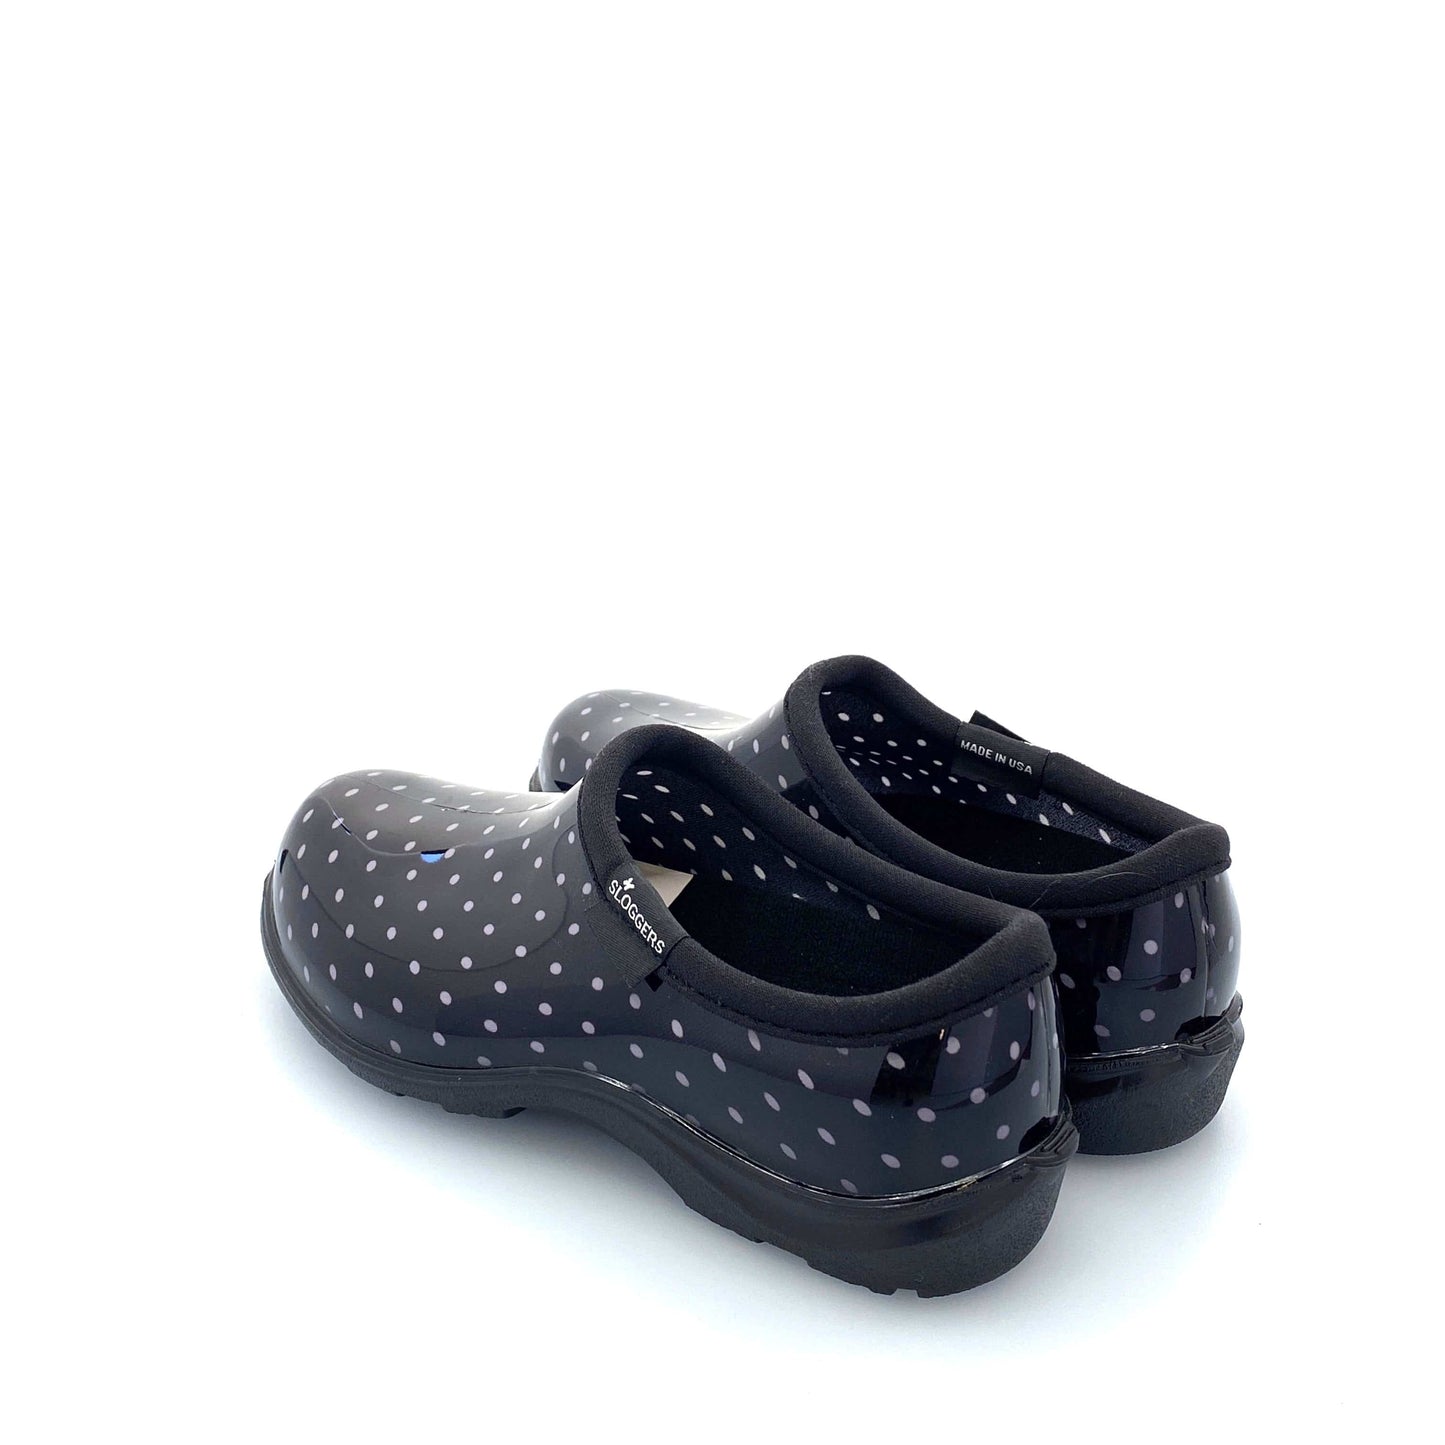 Sloggers Womens Size 6 Garden Shoes Black Polka Dot NEW